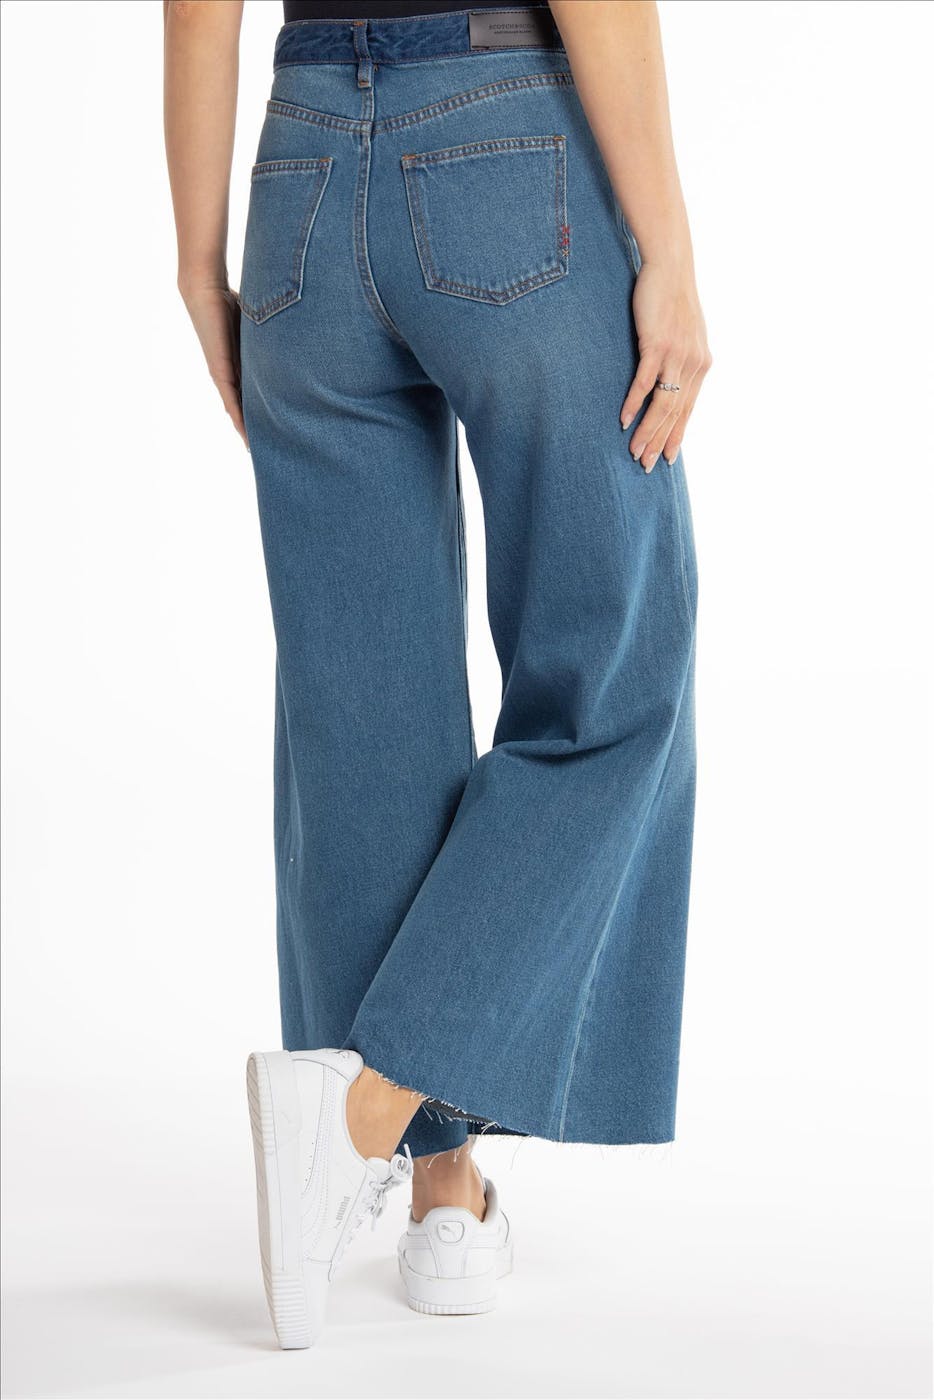 Scotch & Soda - Blauwe high waist flared jeans